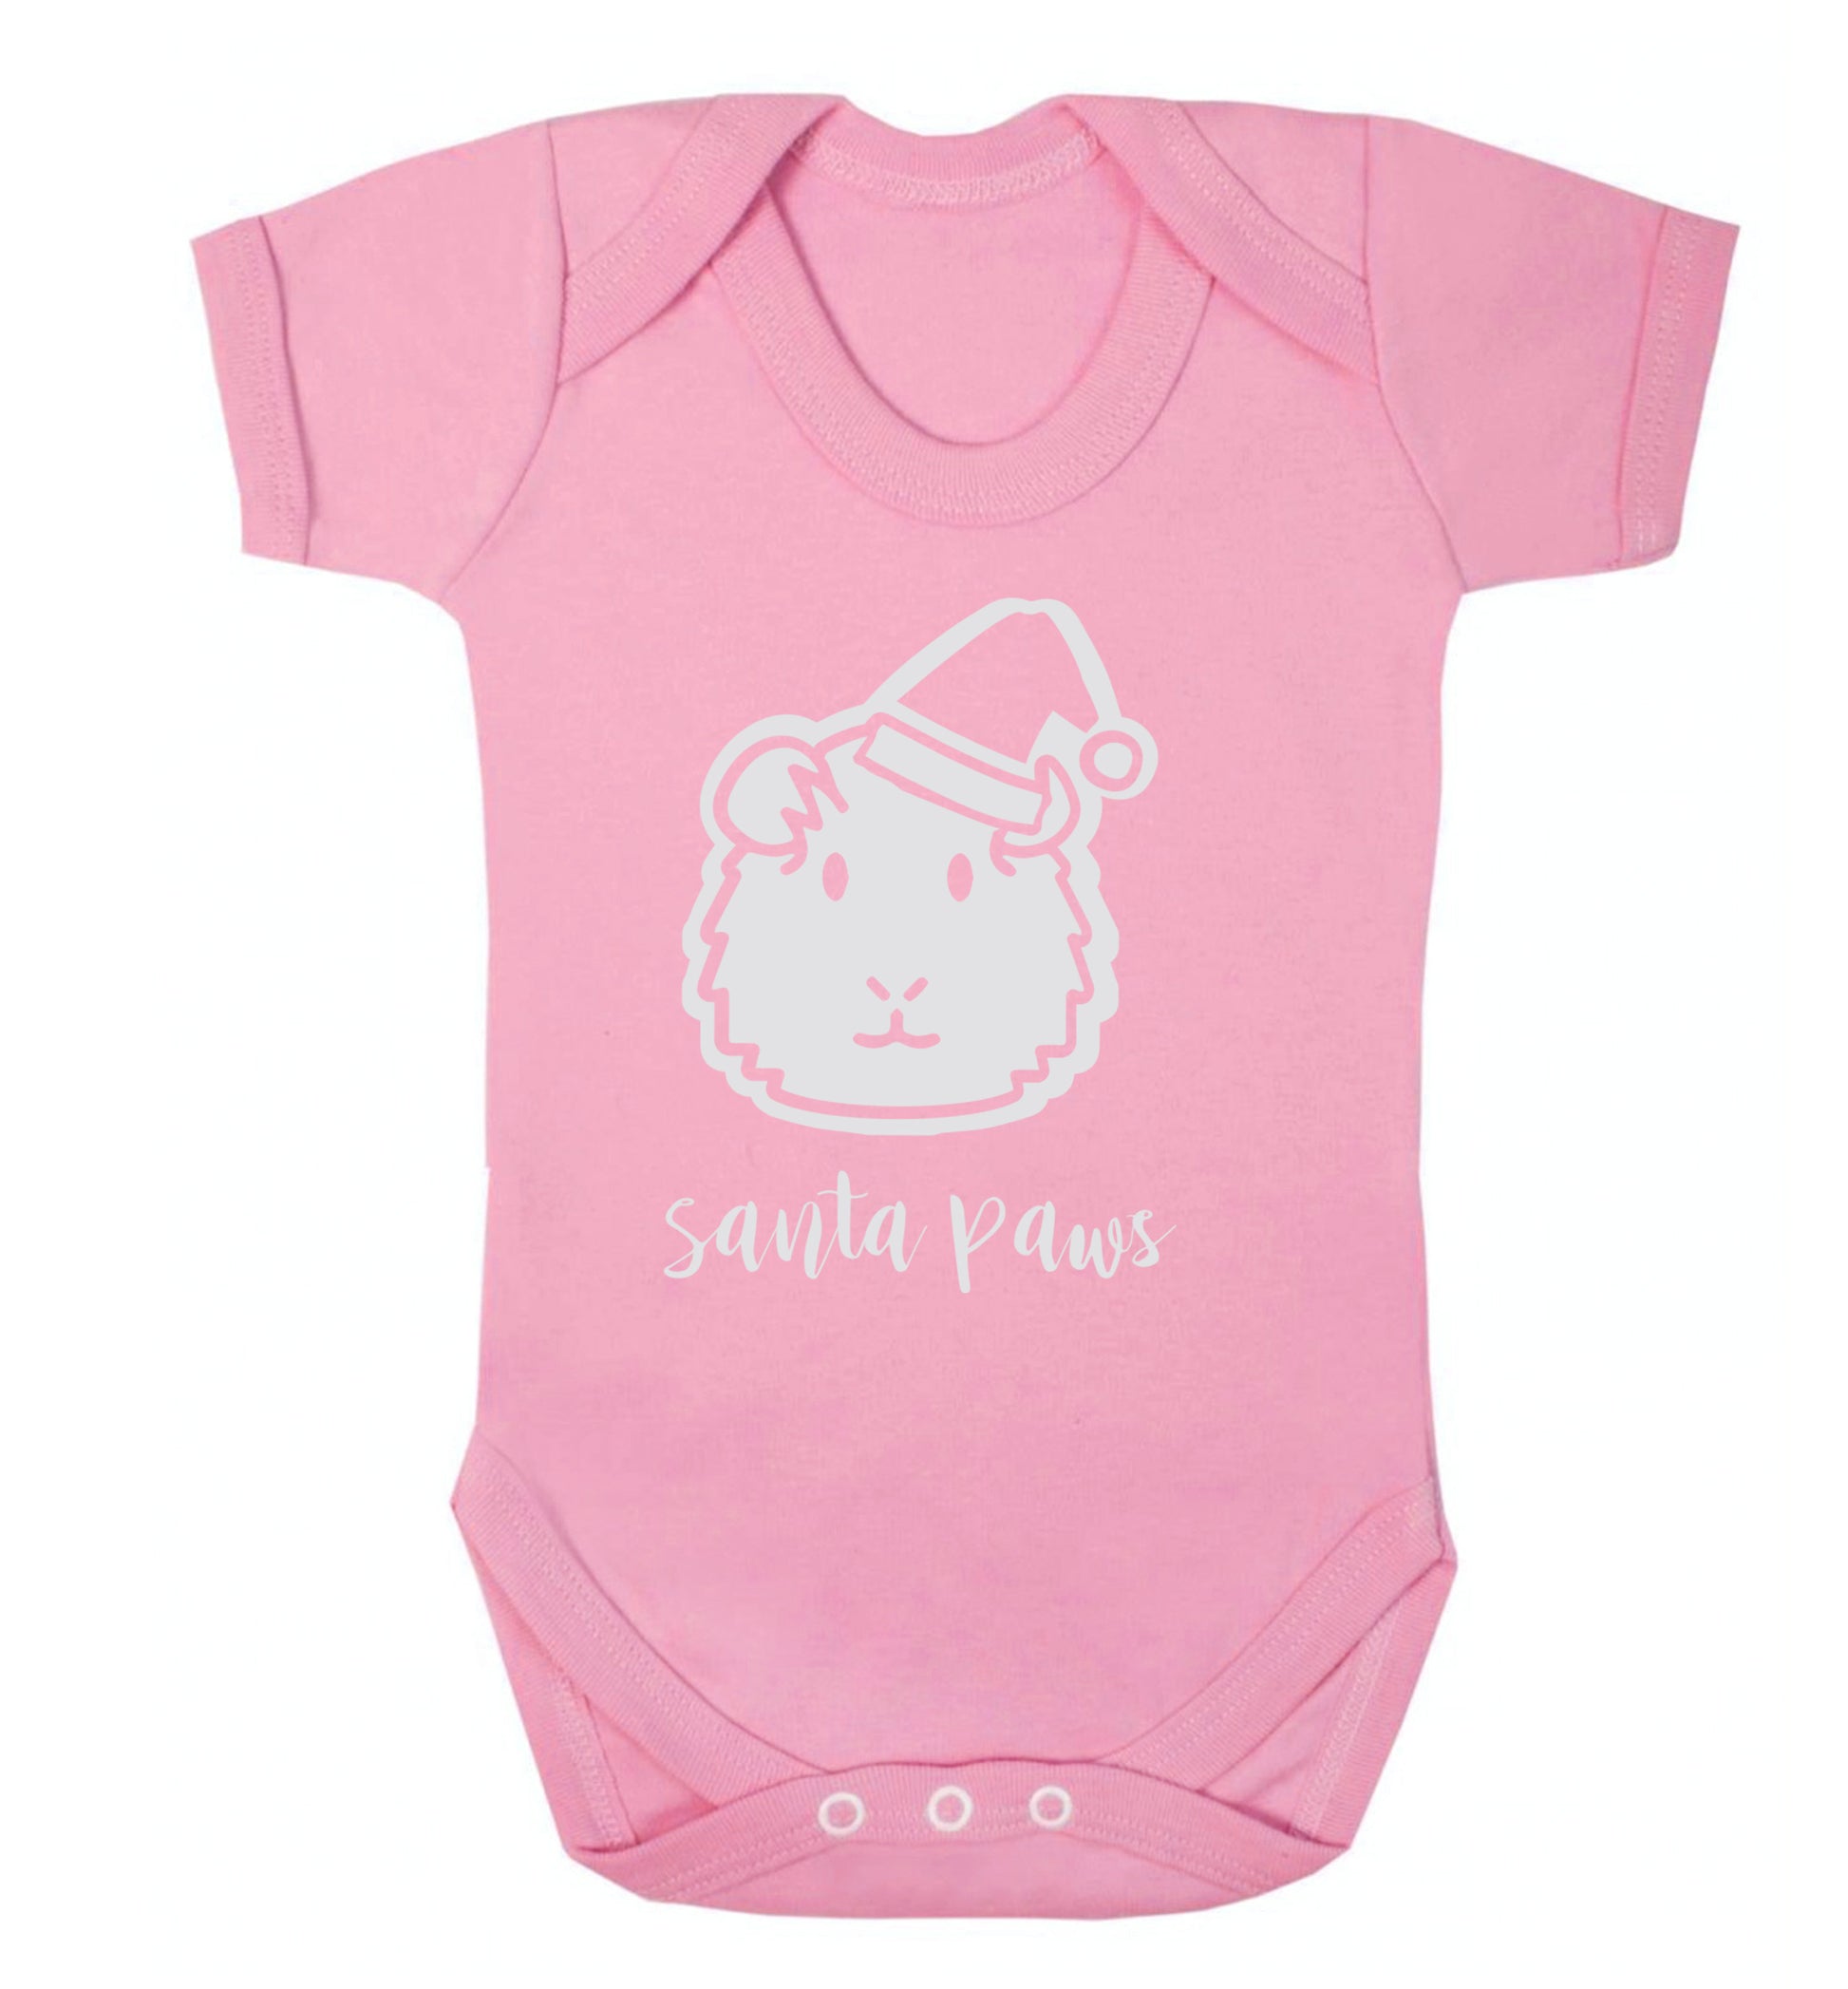 Guinea pig Santa Paws Baby Vest pale pink 18-24 months